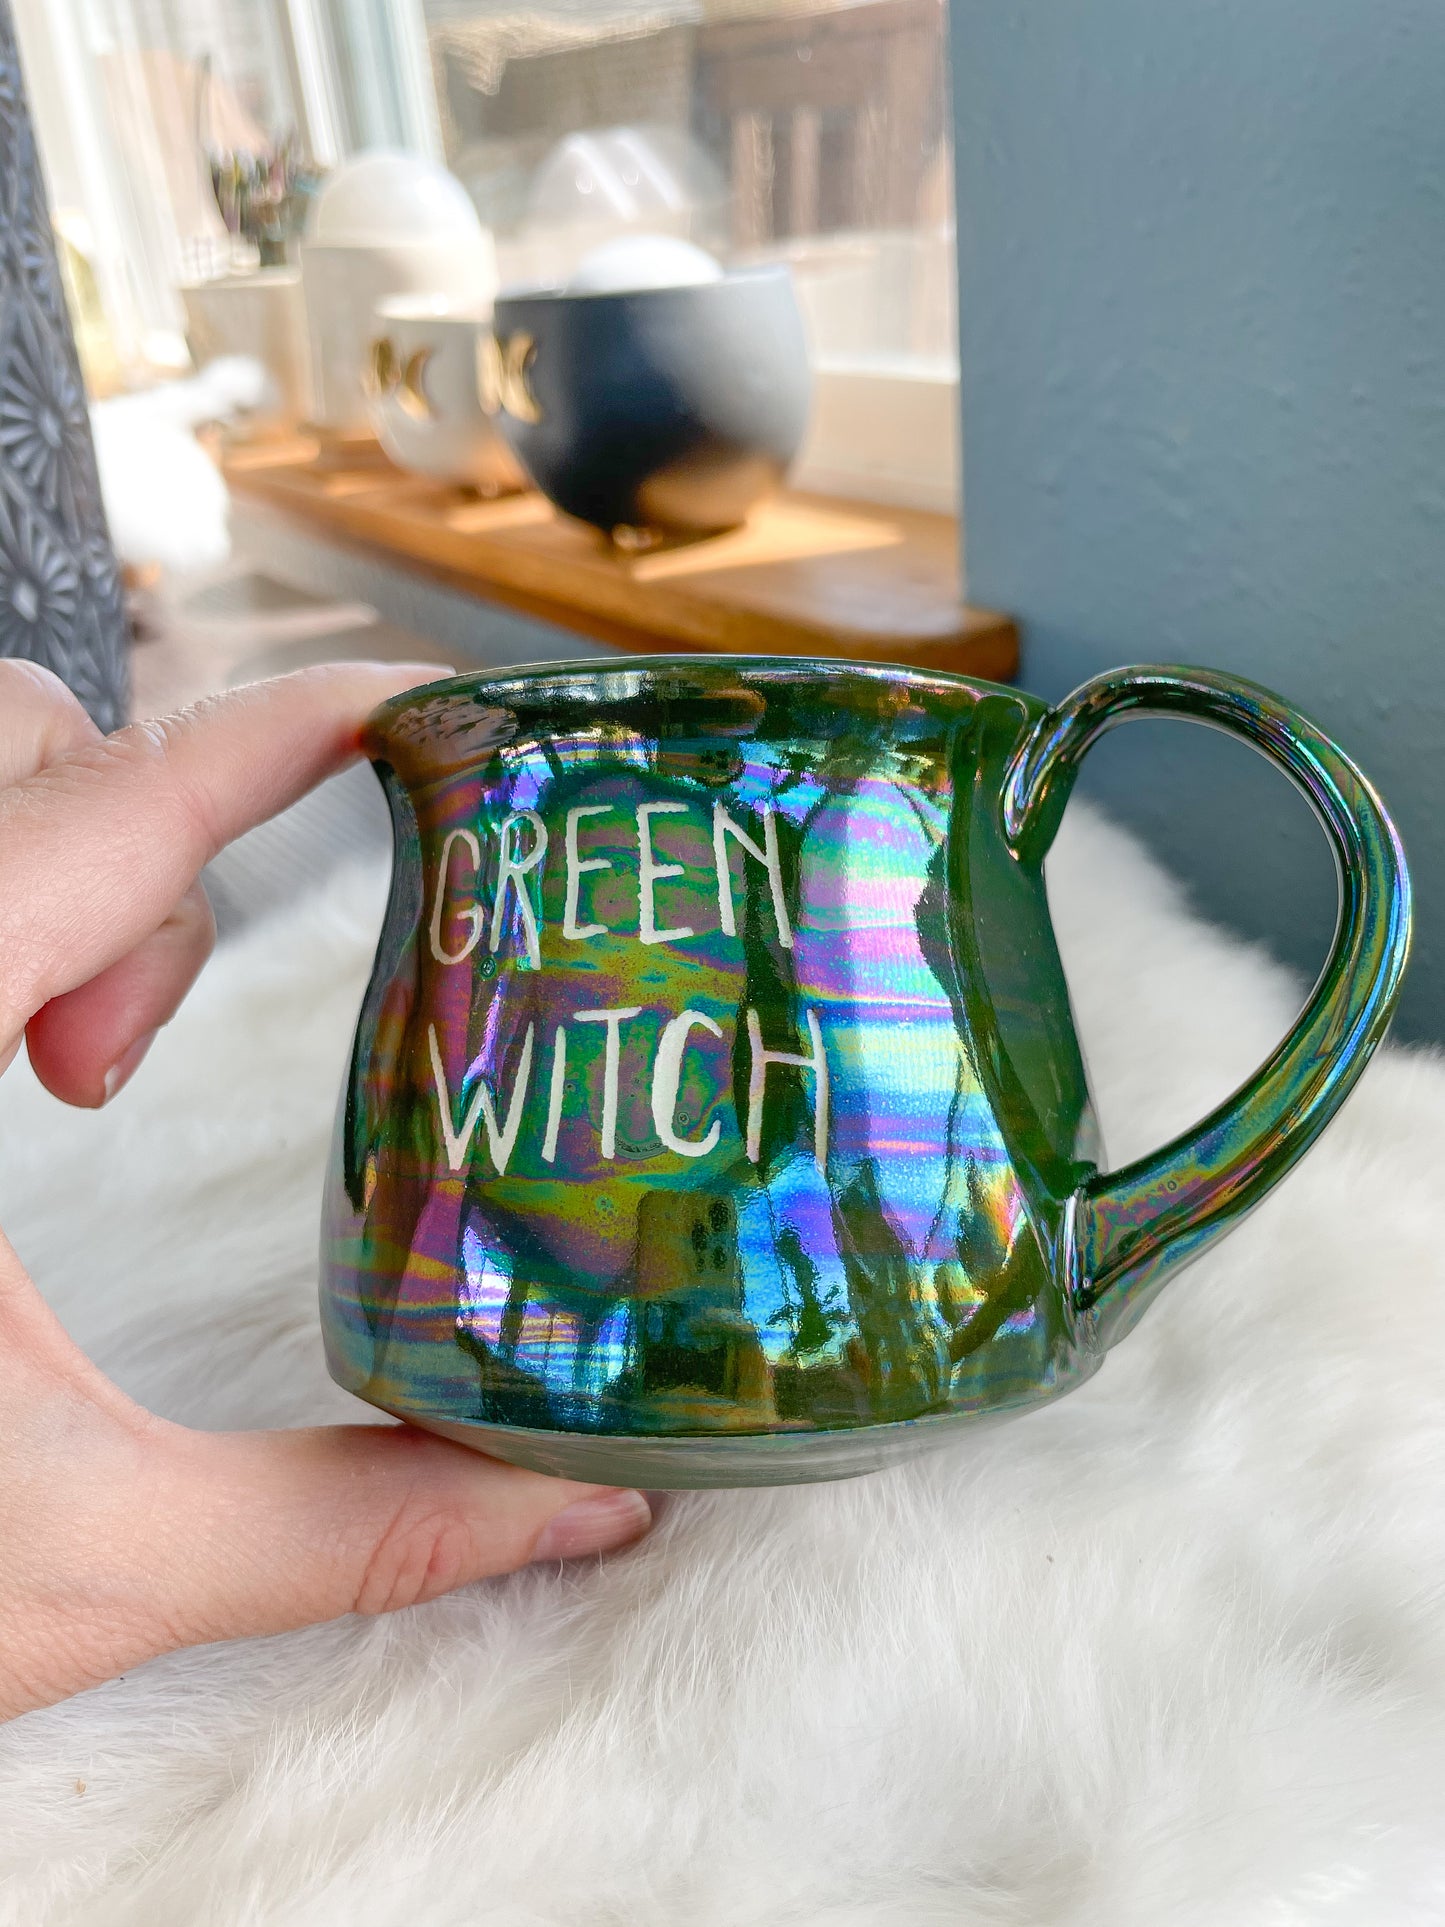 Green Witch Mug